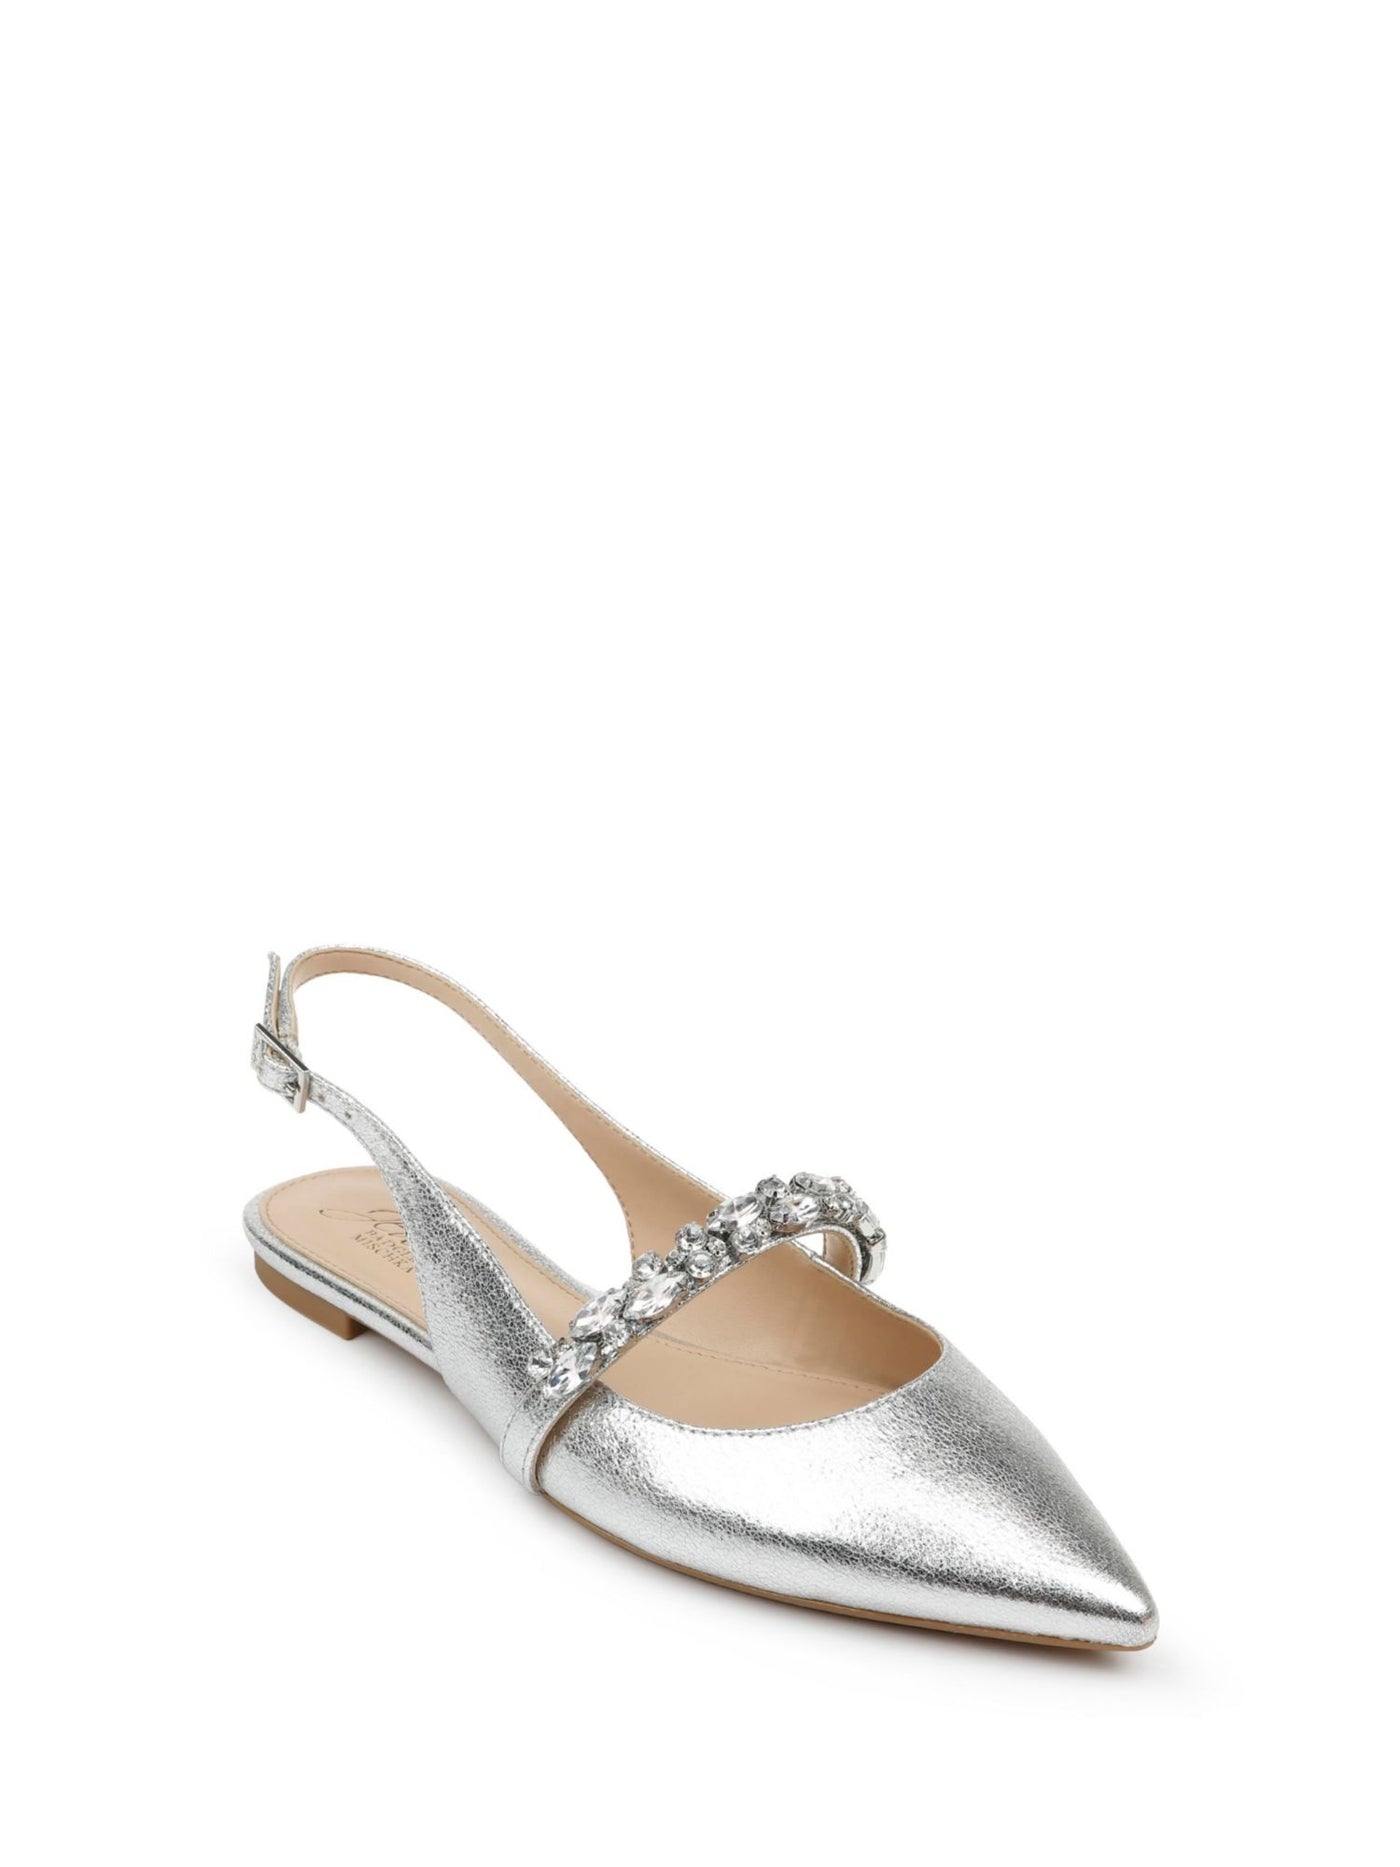 JEWEL BADGLEY MISCHKA Womens Silver Rhinestone Cushioned Bambi Pointed Toe Block Heel Buckle Flats Shoes 8.5